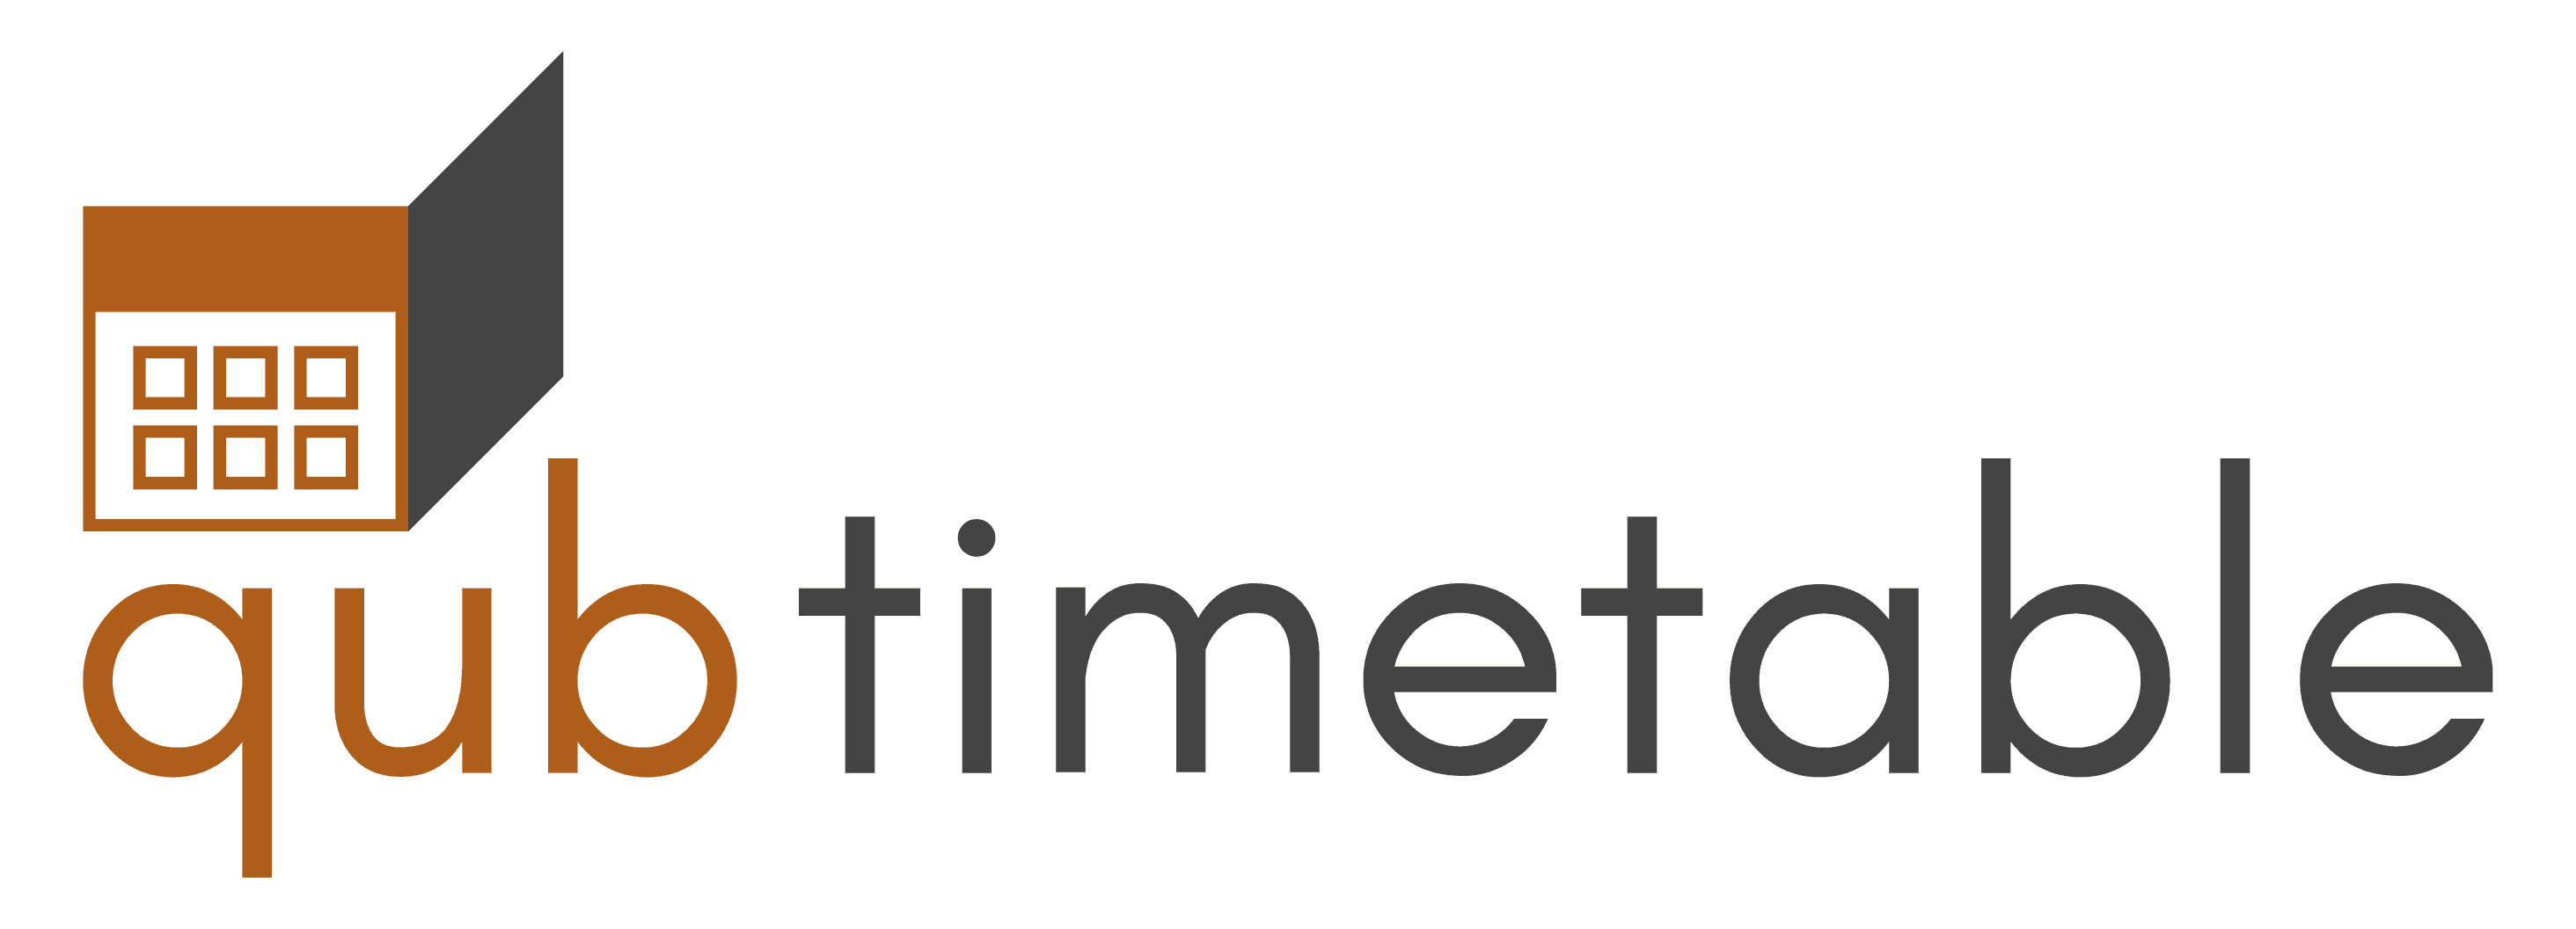 qubtimetable logo